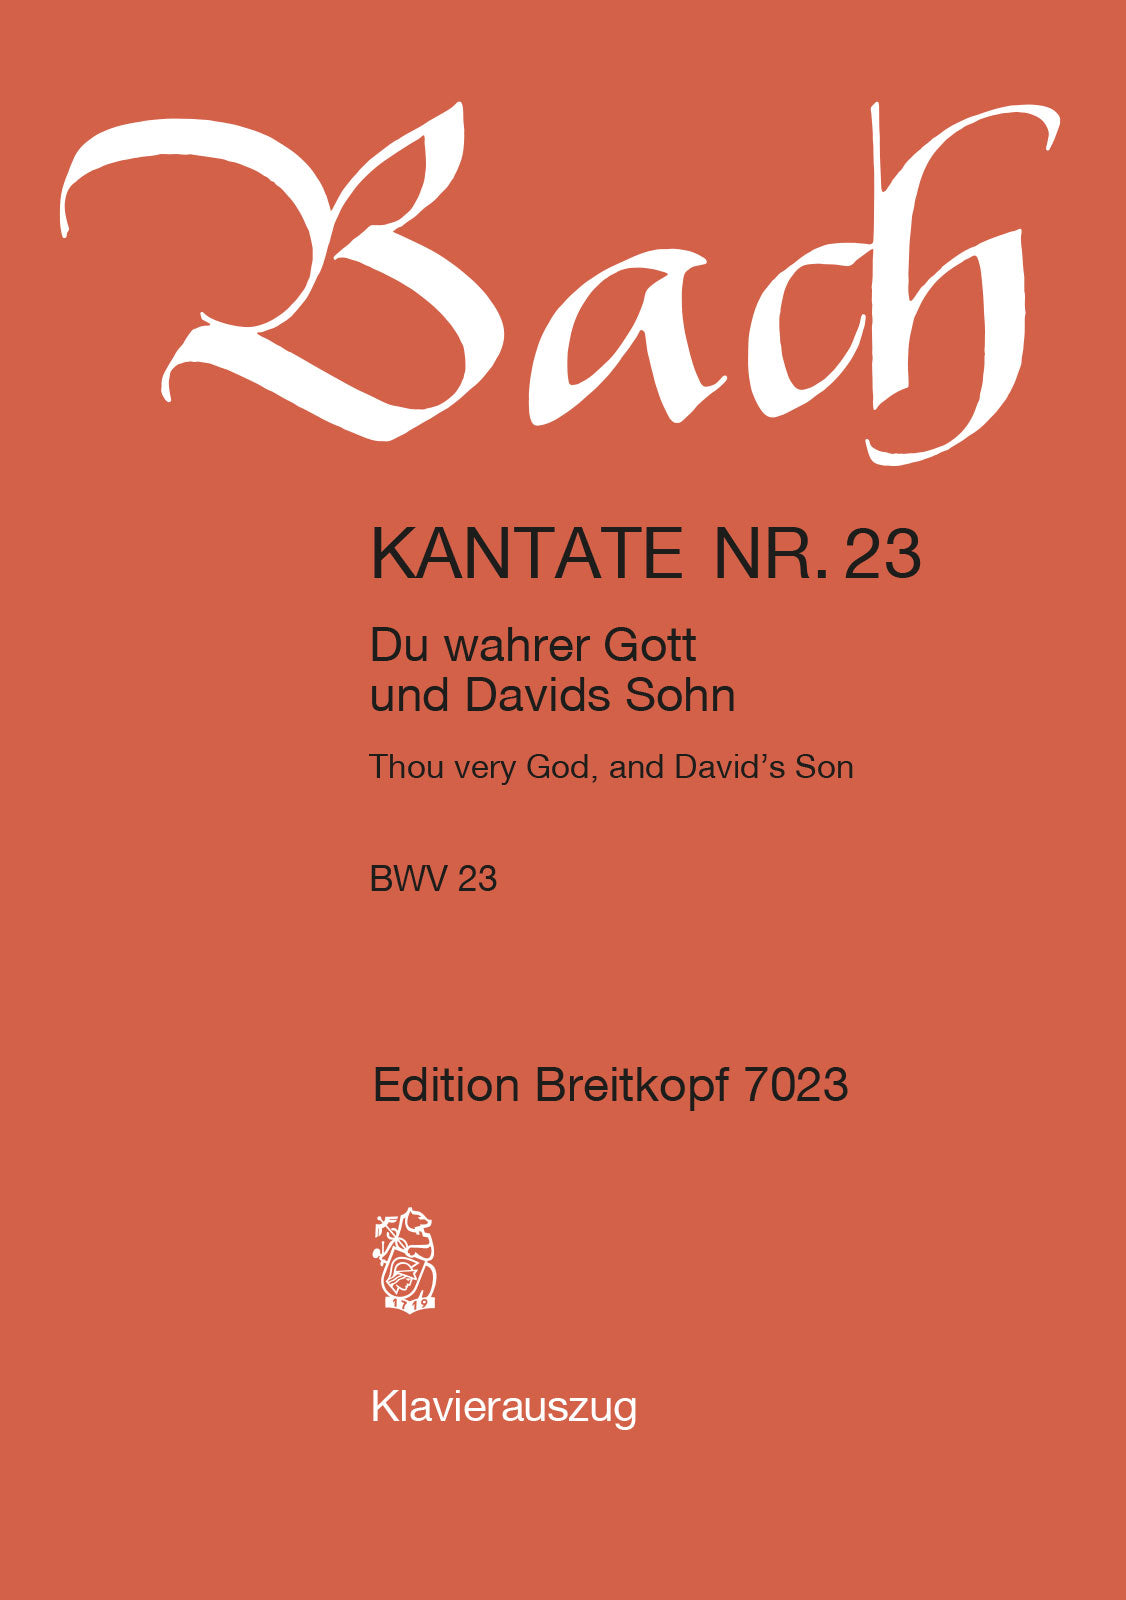 Bach: Du wahrer Gott and Davids Sohn, BWV 23